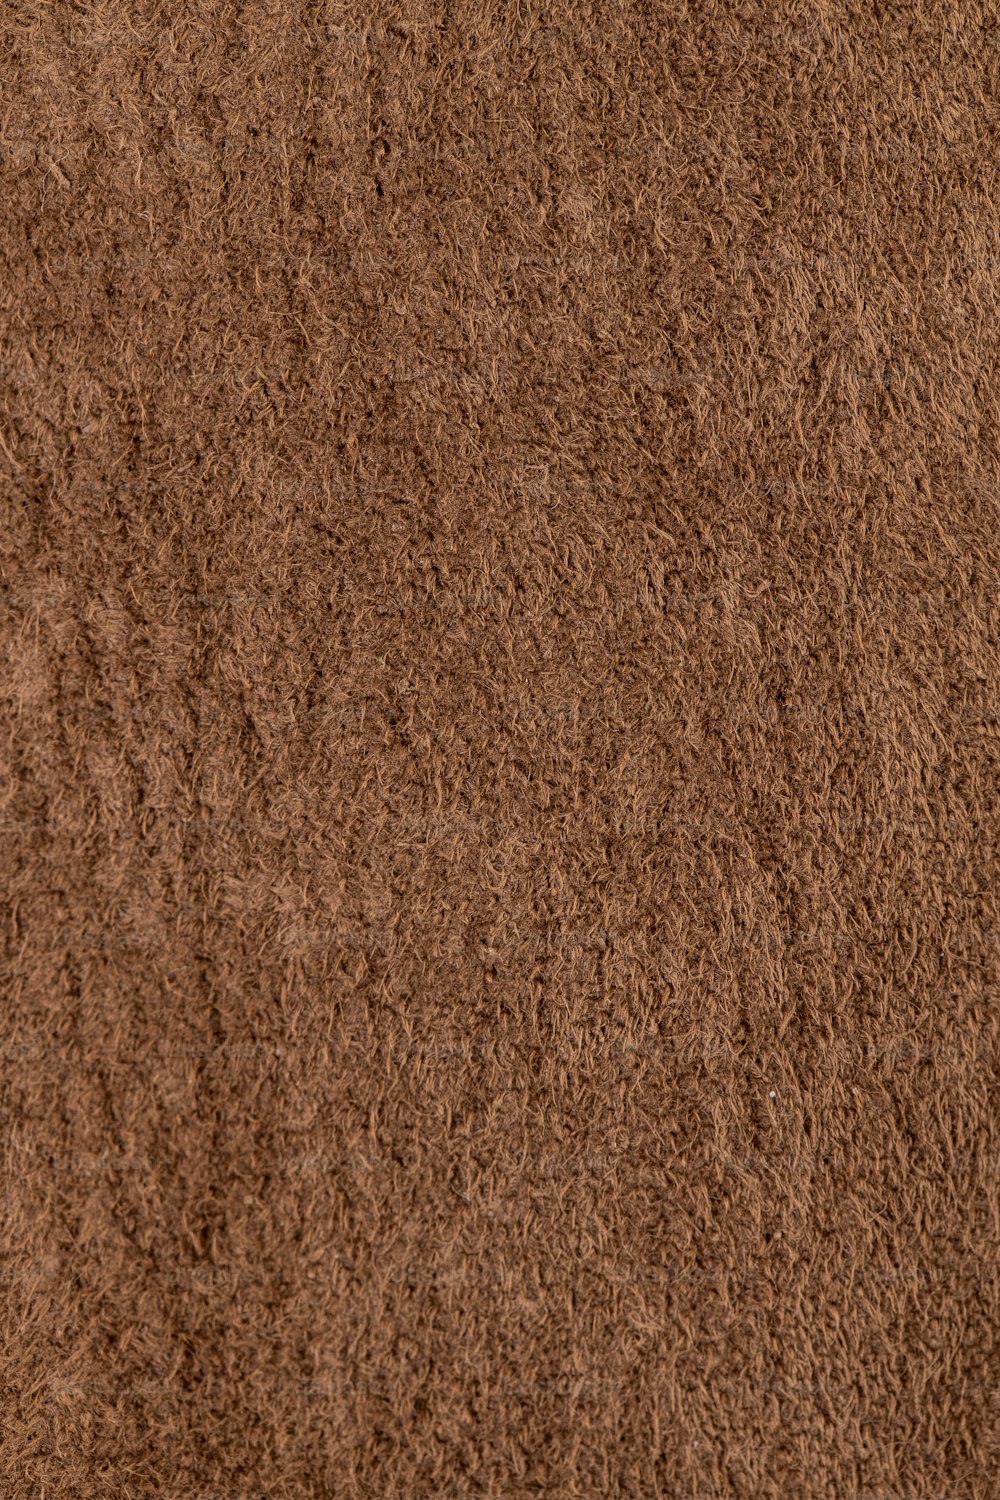 a close up of a brown carpet texture